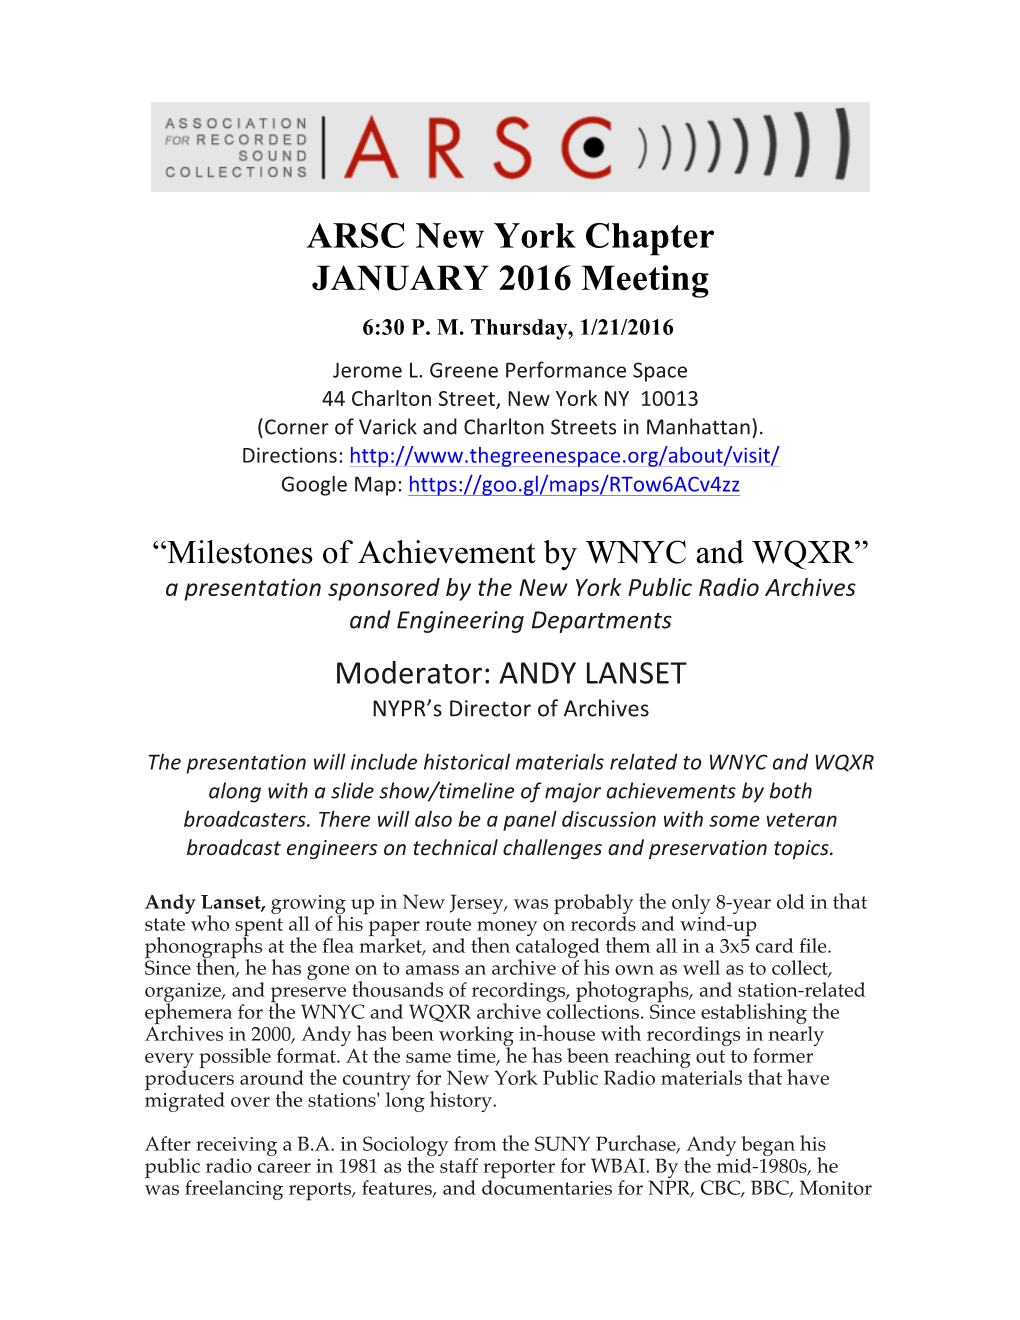 ARSC New York Chapter JANUARY 2016 Meeting